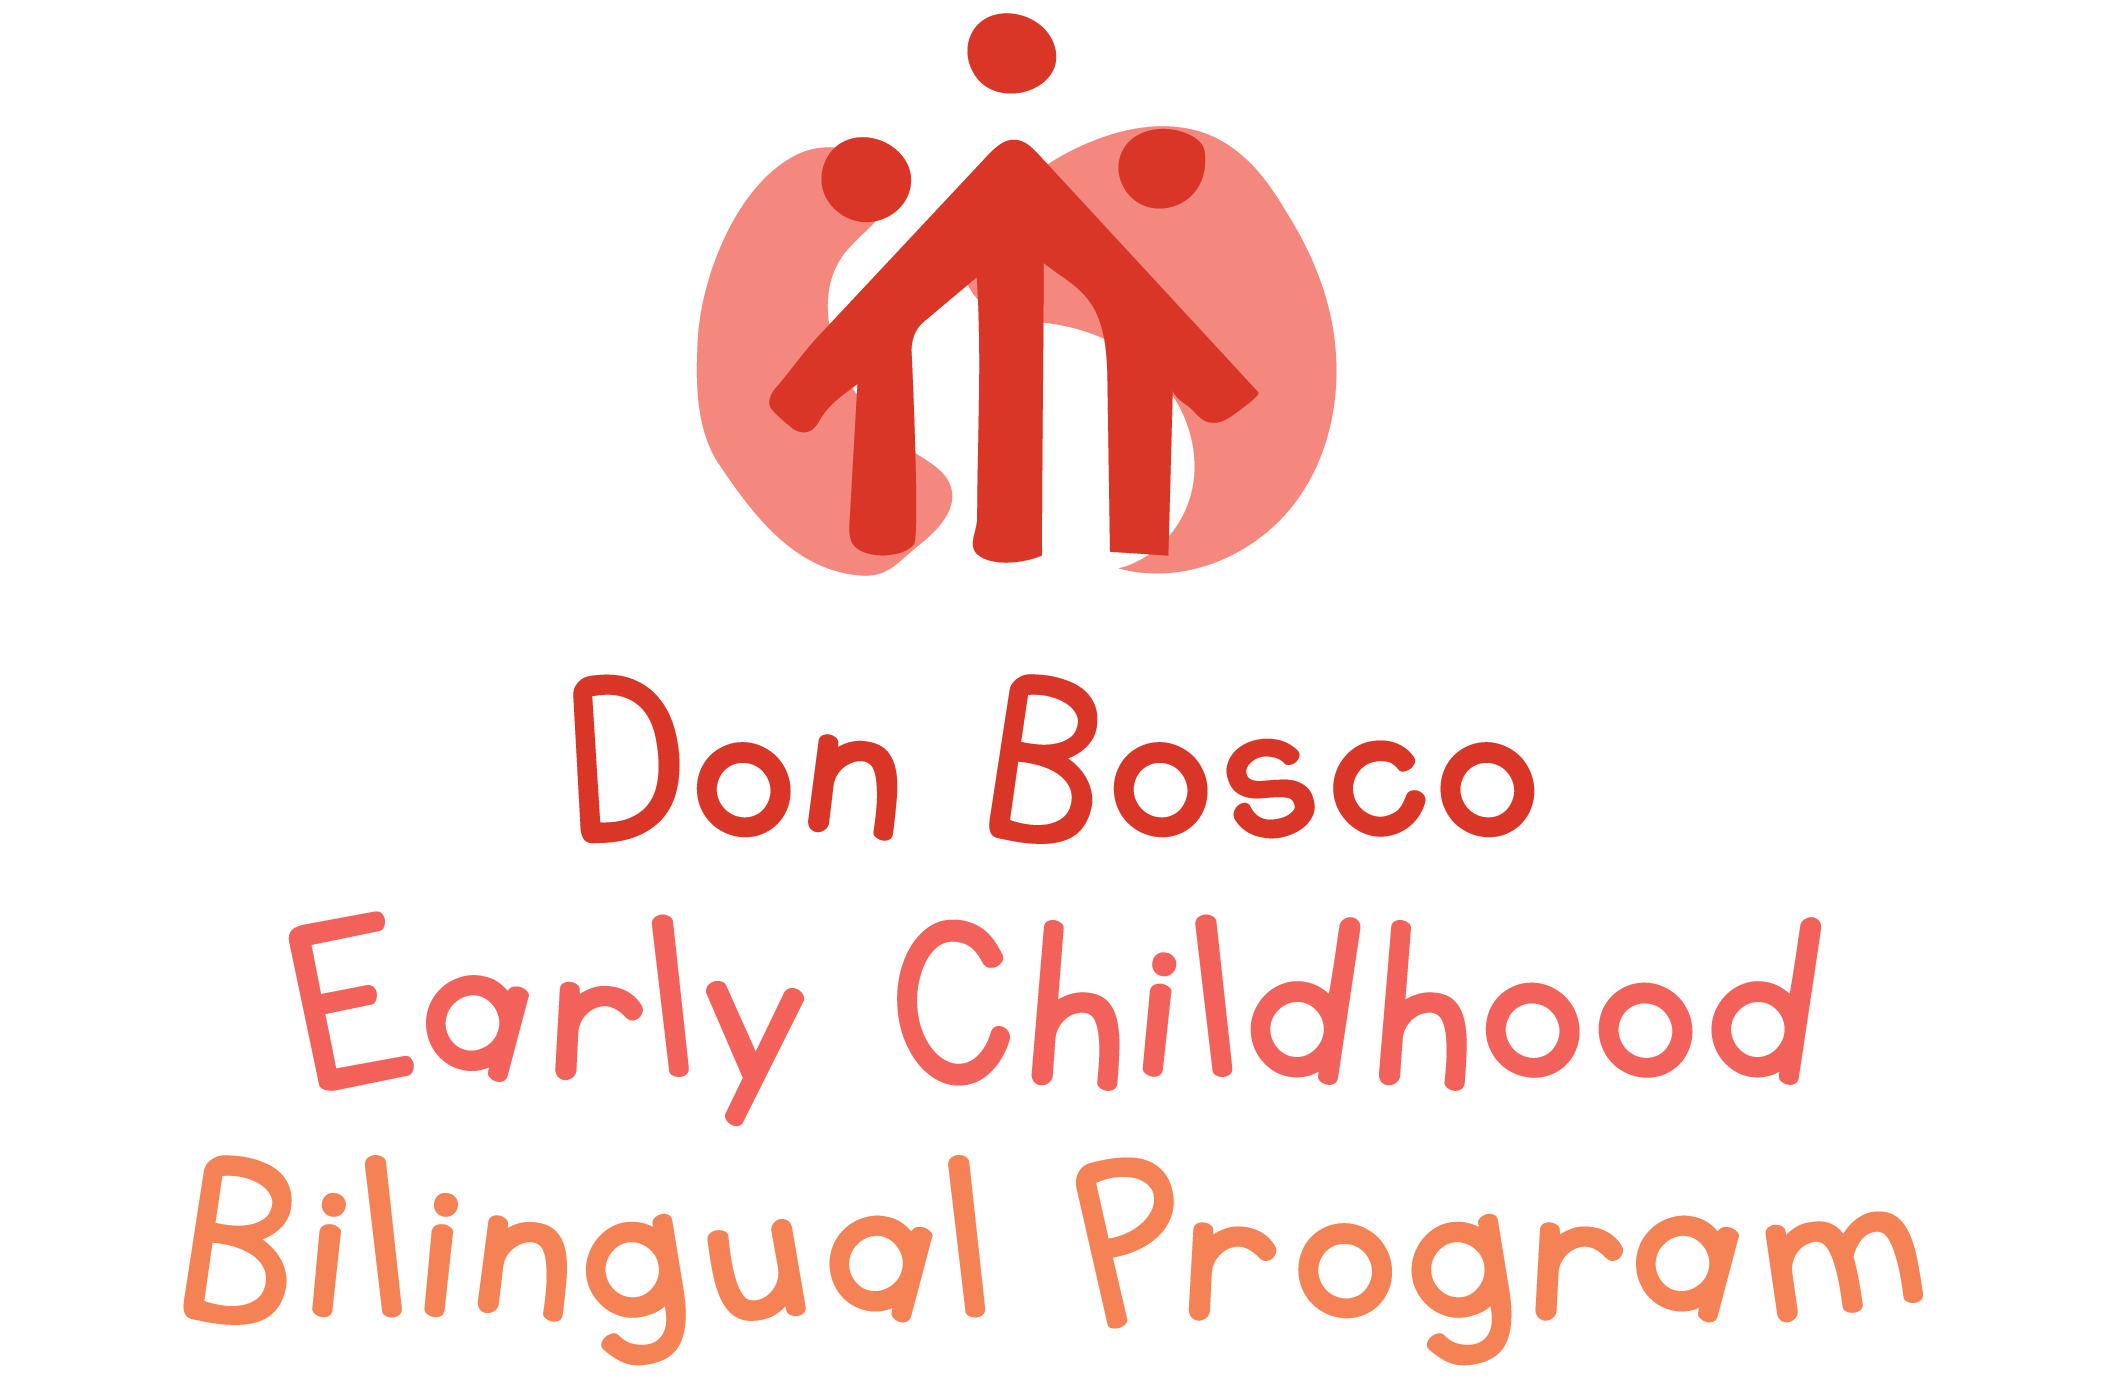 Don Bosco Early Childhood Bilingual Program